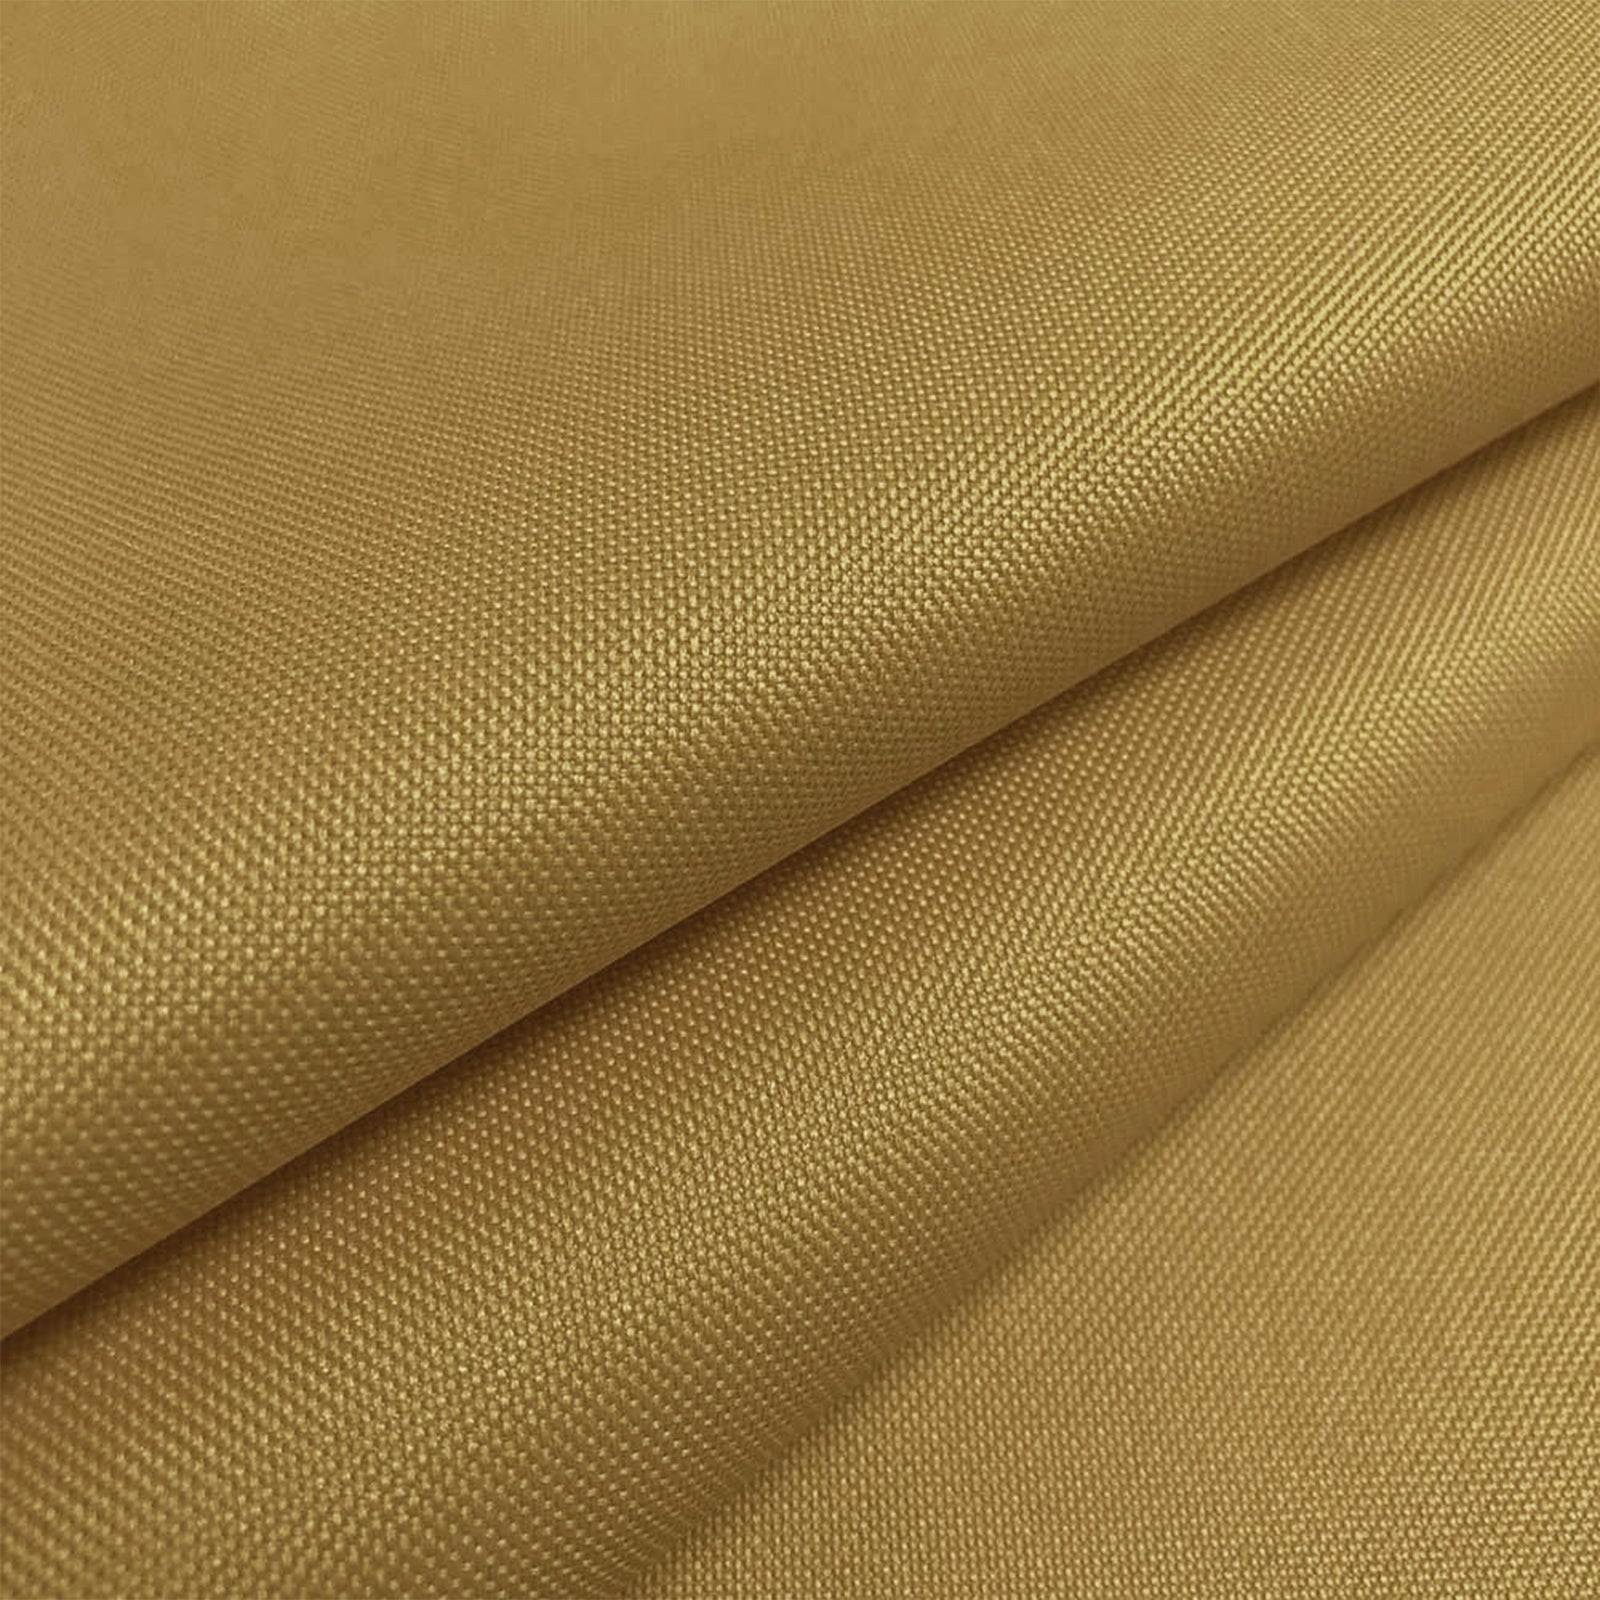 Heavy Duty 600 Denier Polyester Canvas Fabric Orange (NON WATERPROOF)